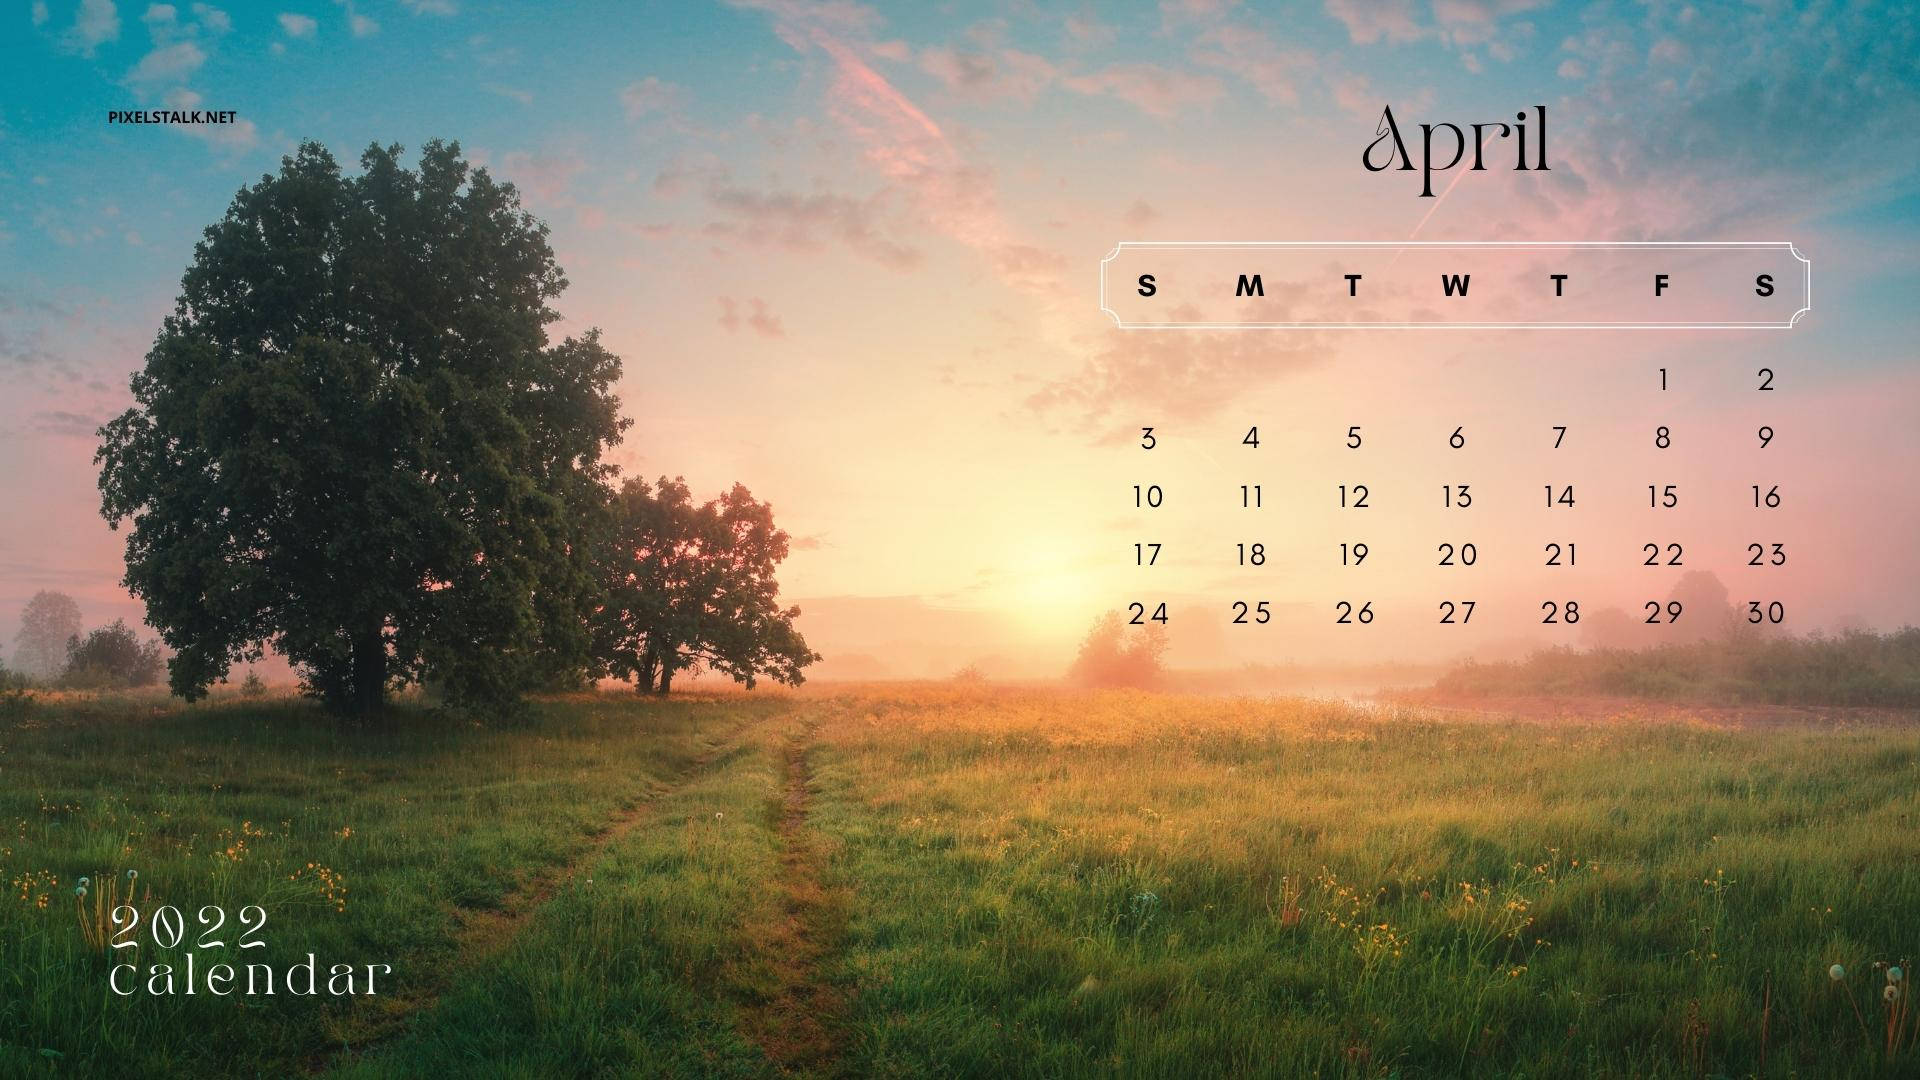 100+] April 2022 Calendar Wallpapers 